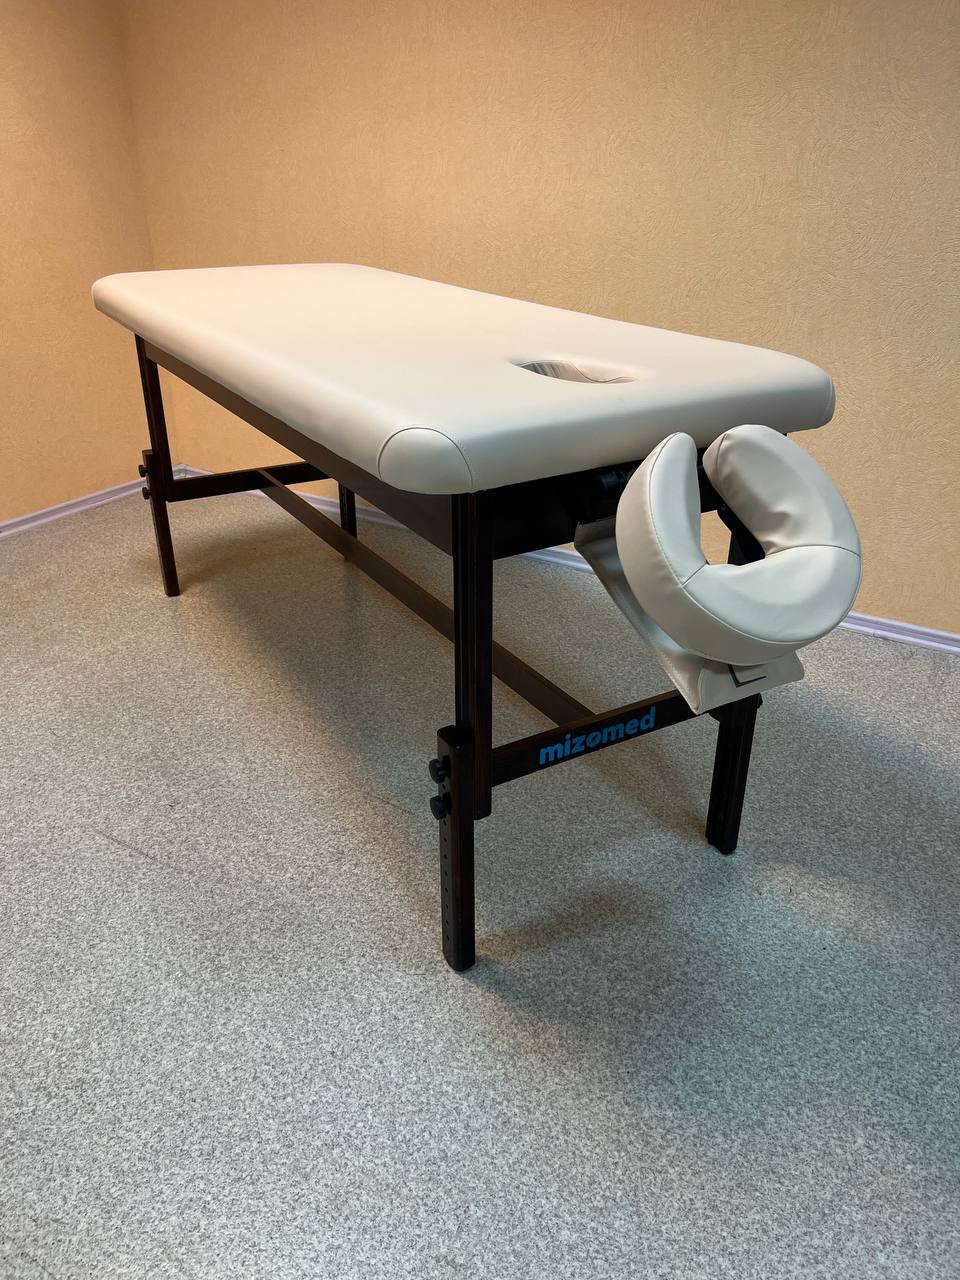 Массажный стационарный стол Mizomed Essence-Flat SEF3S30+H - 16 